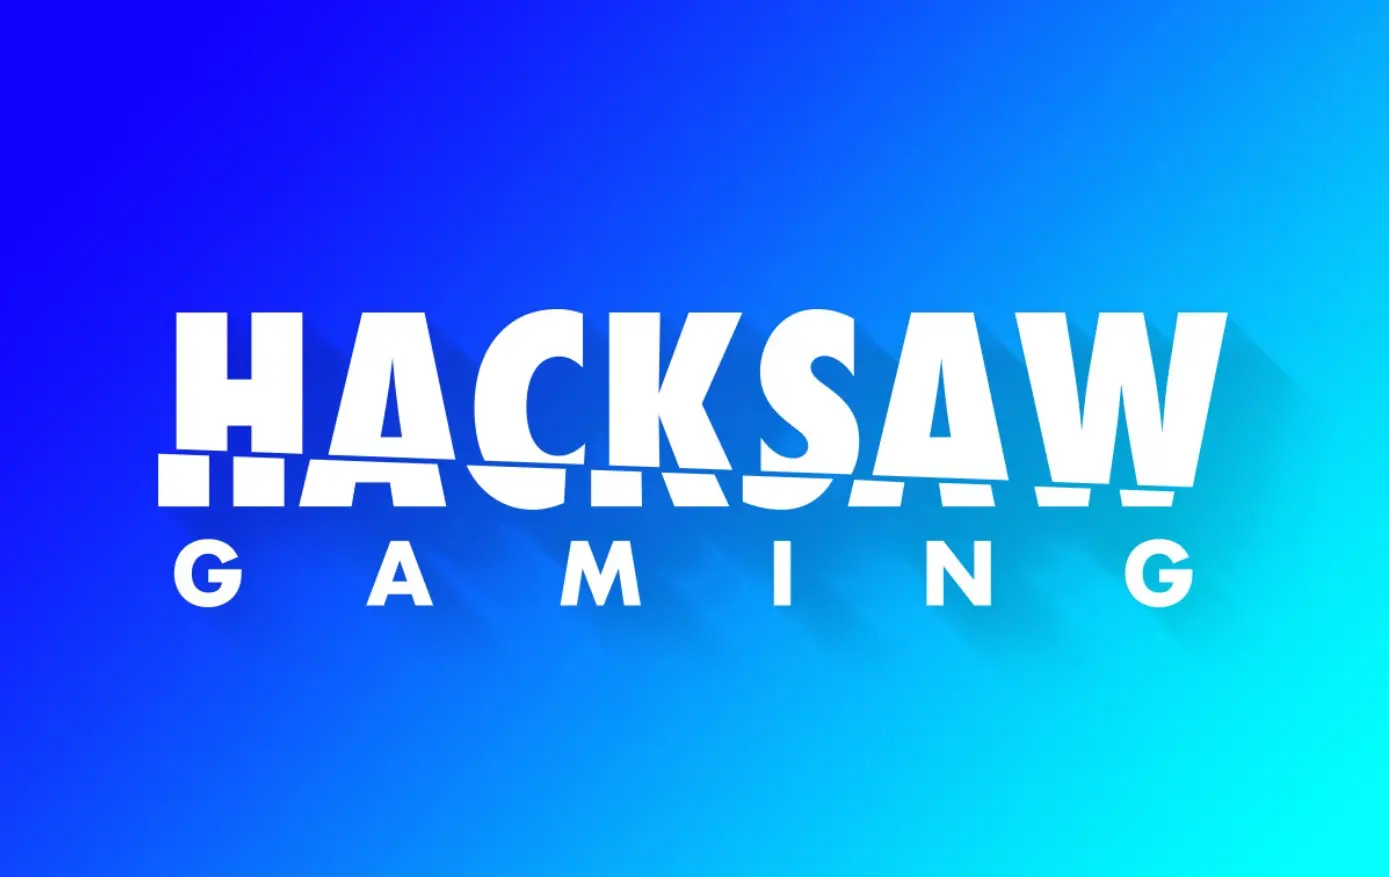 A Hacksaw Gaming New Jersey licencevel boviti az Egyesult Allamok jpg